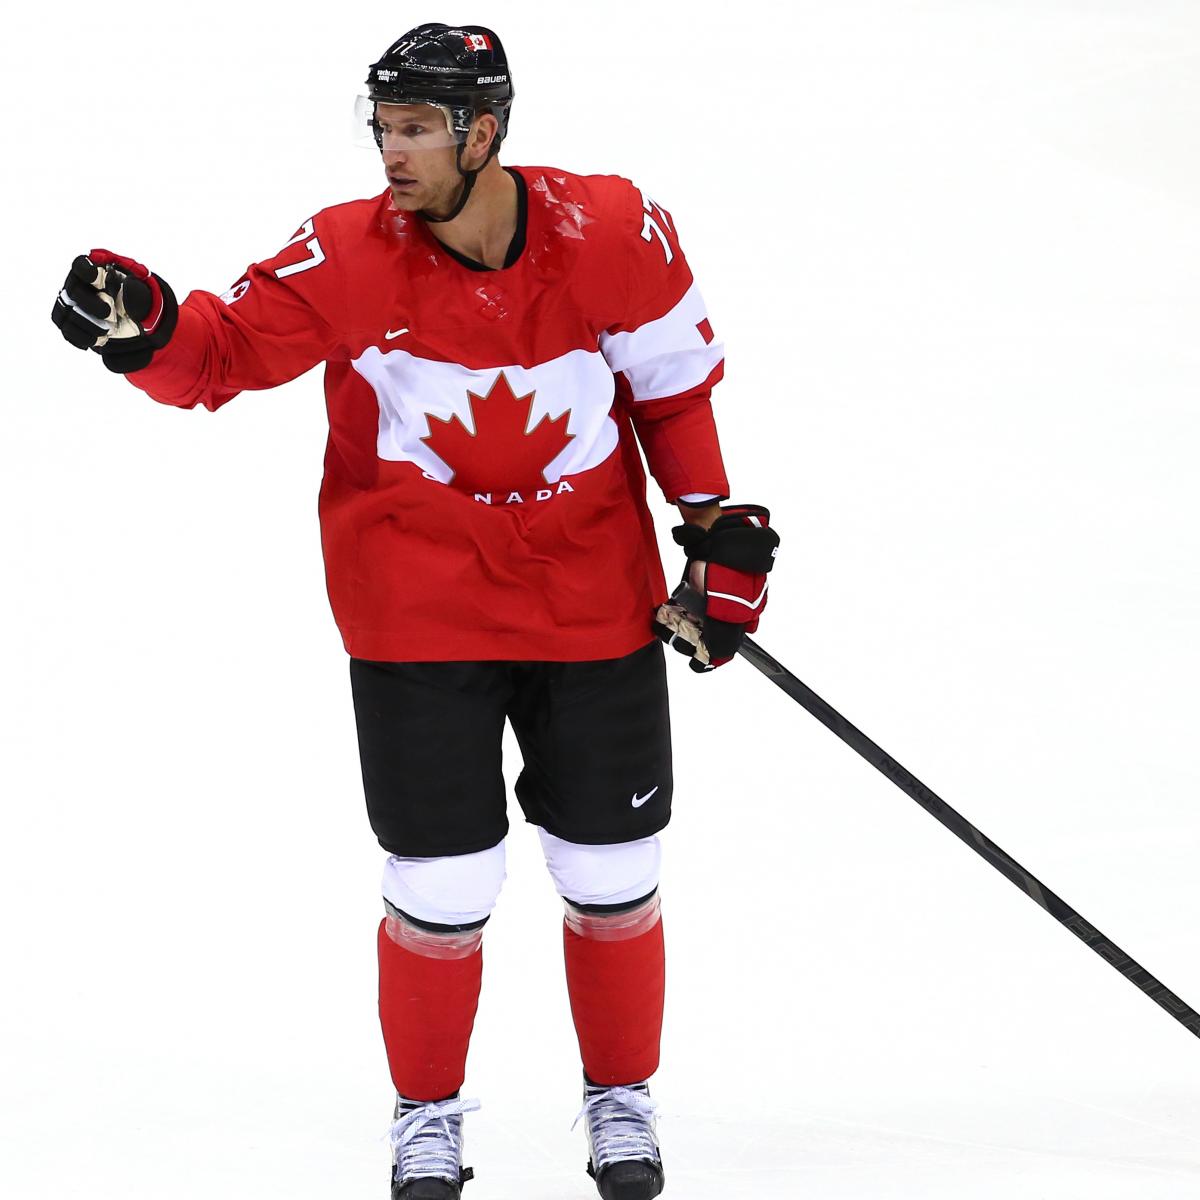 Roberto Luongo still looks like Team Canada's starter at Sochi Olympics